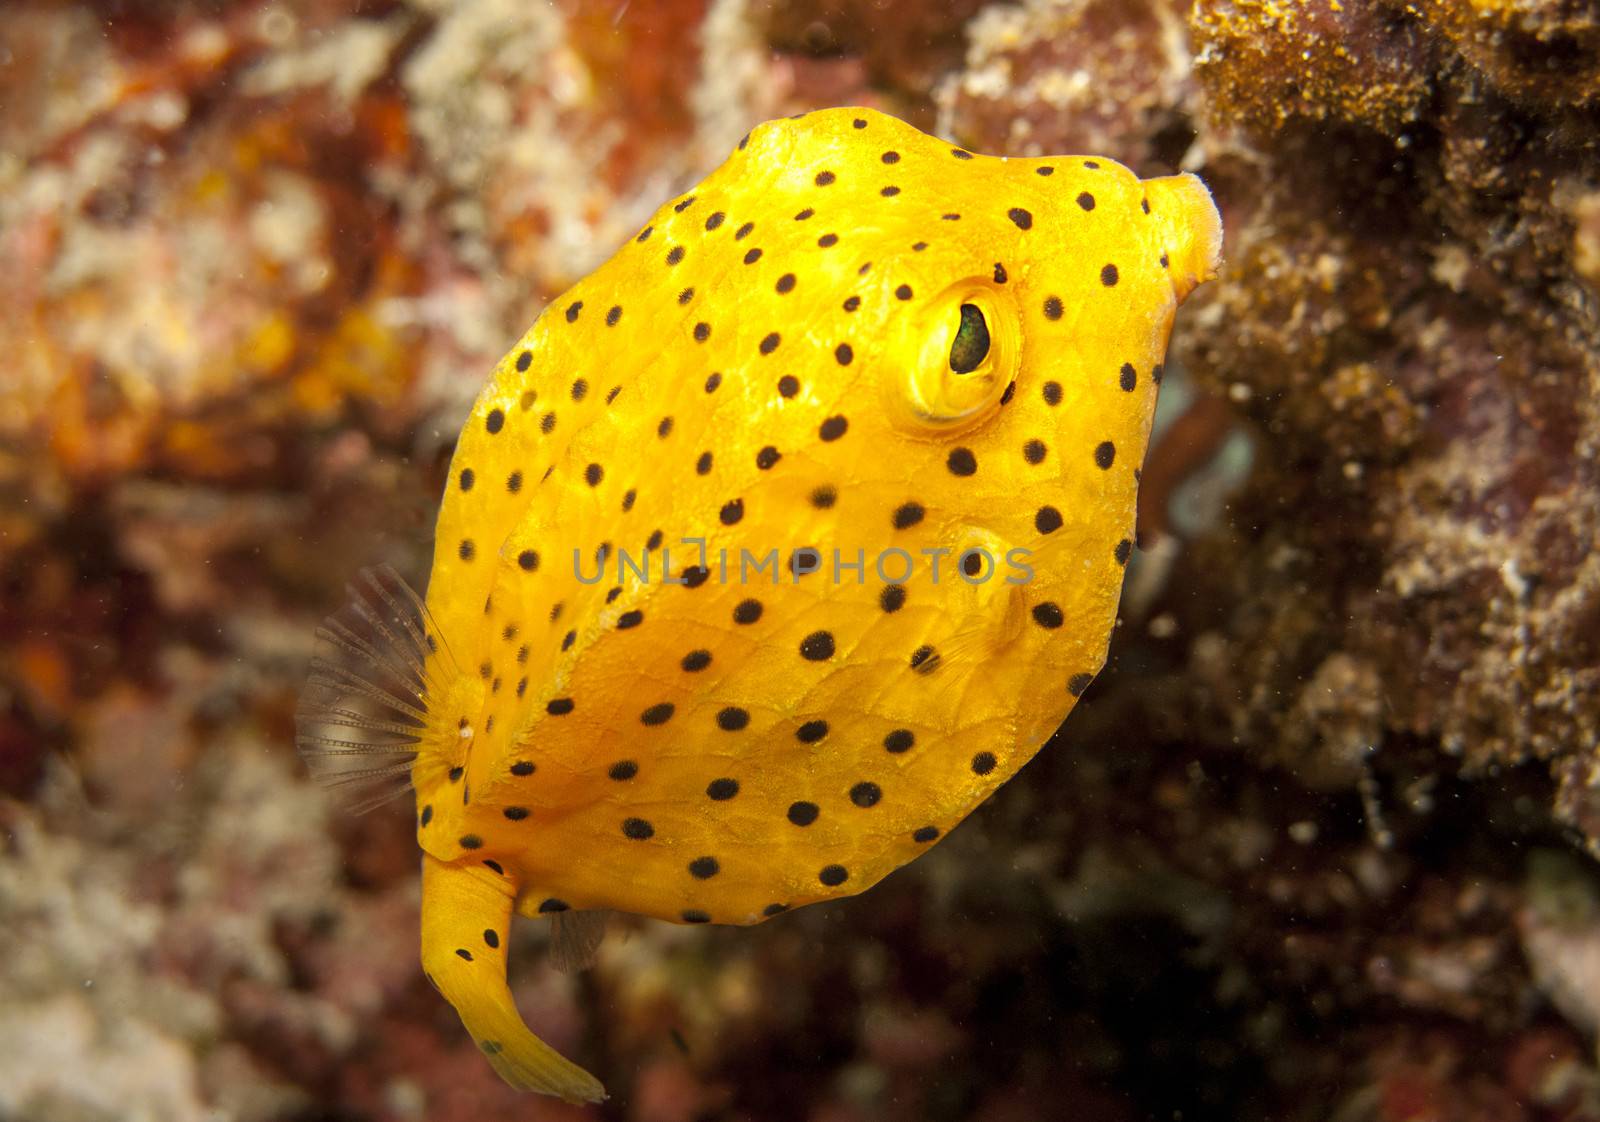 young yellow boxfish fills the shot